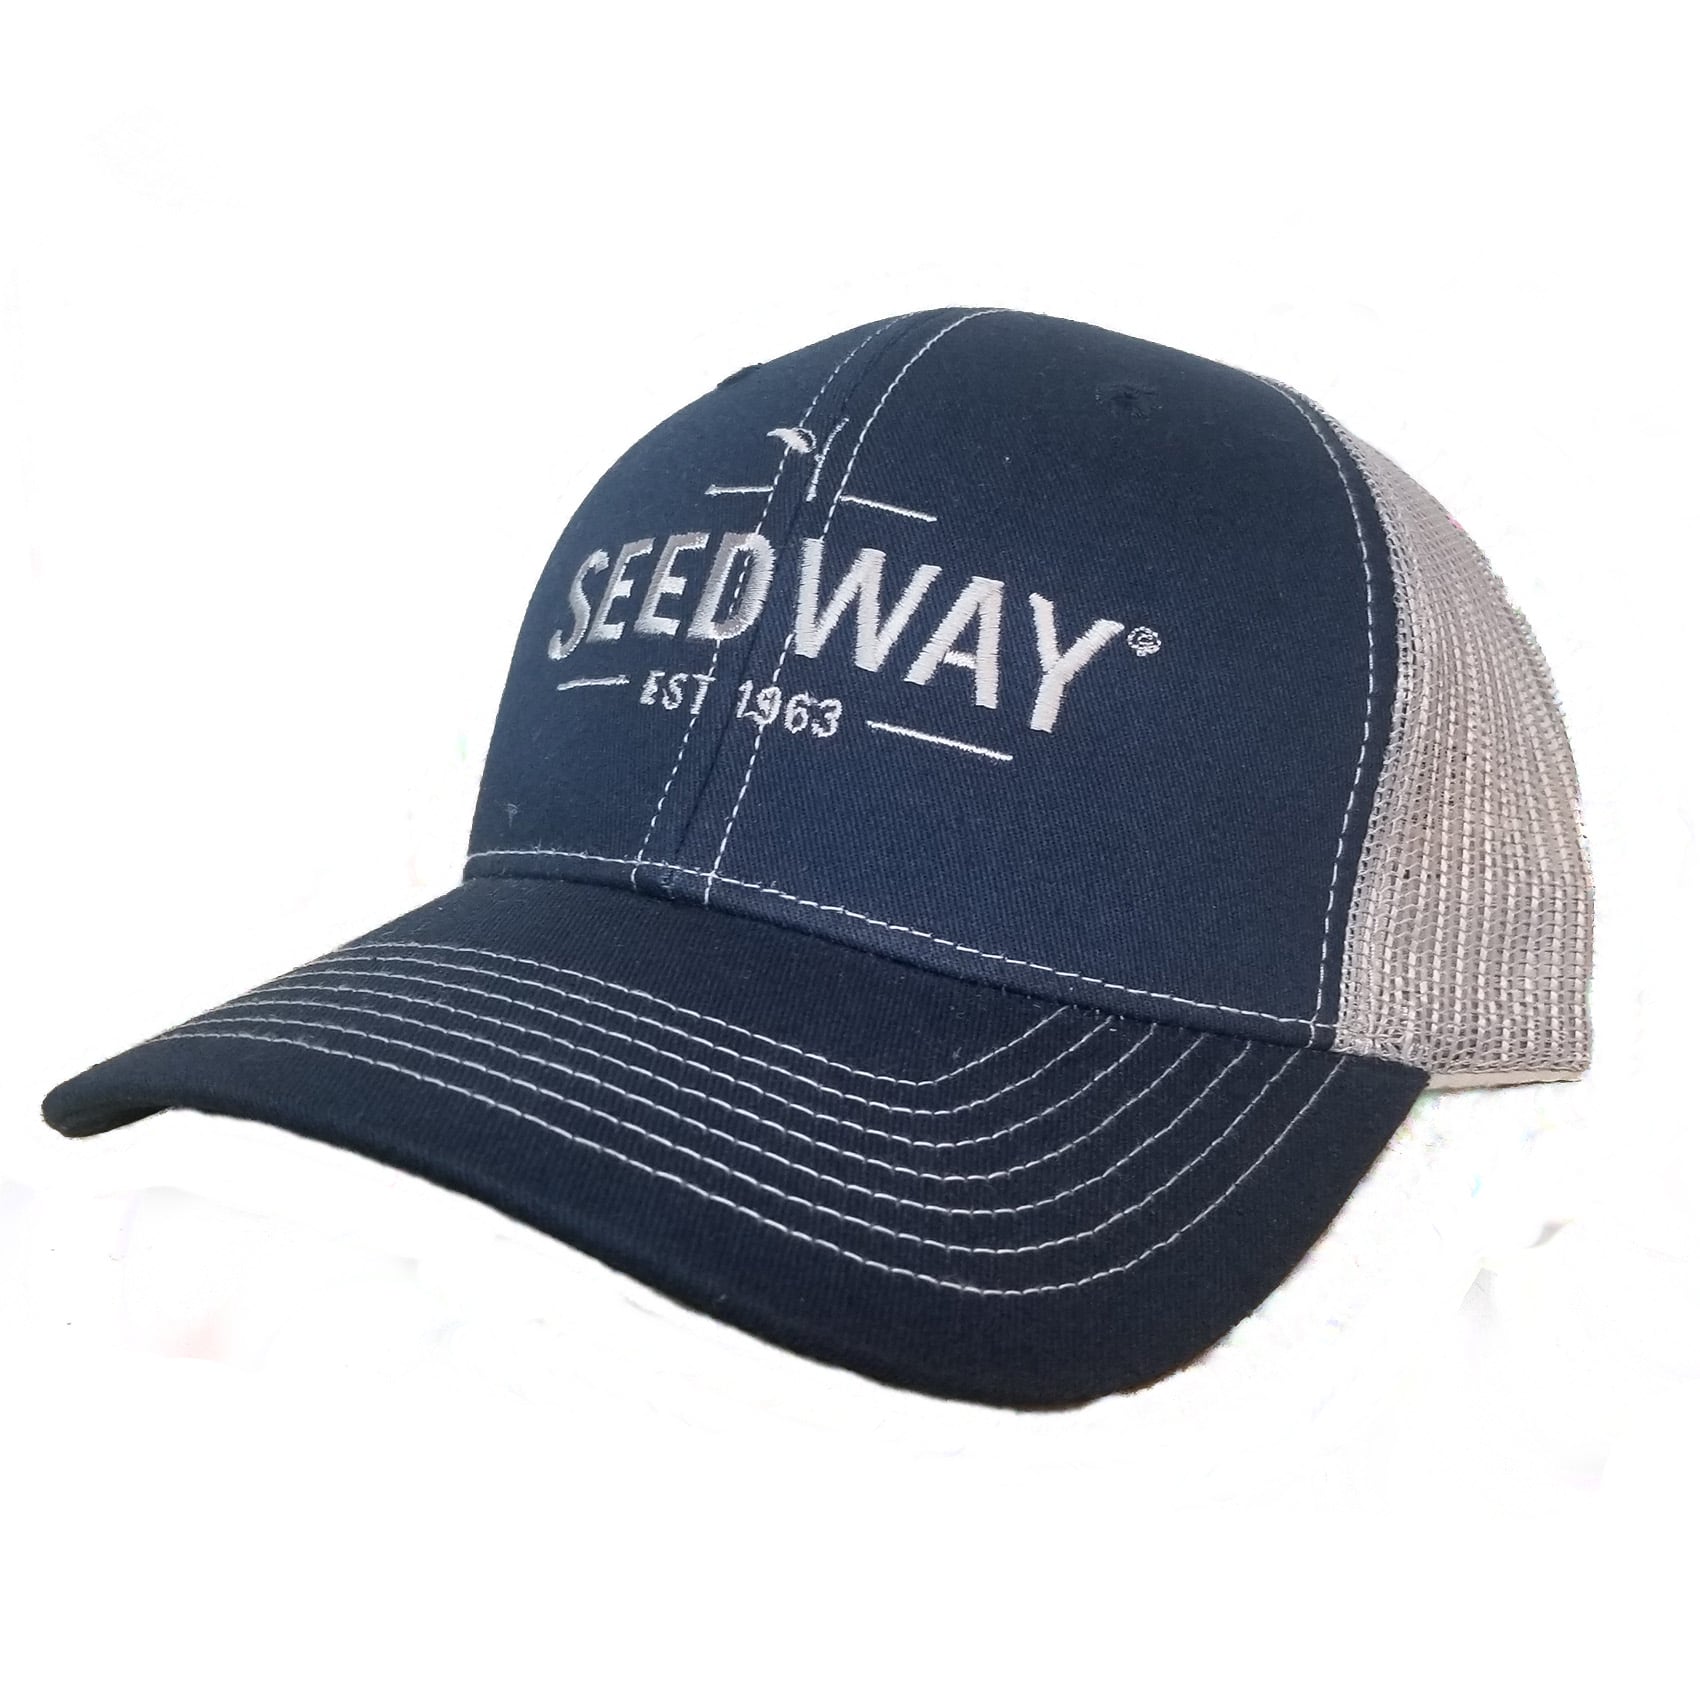 Seedway branded mesh trucker hat navy blue